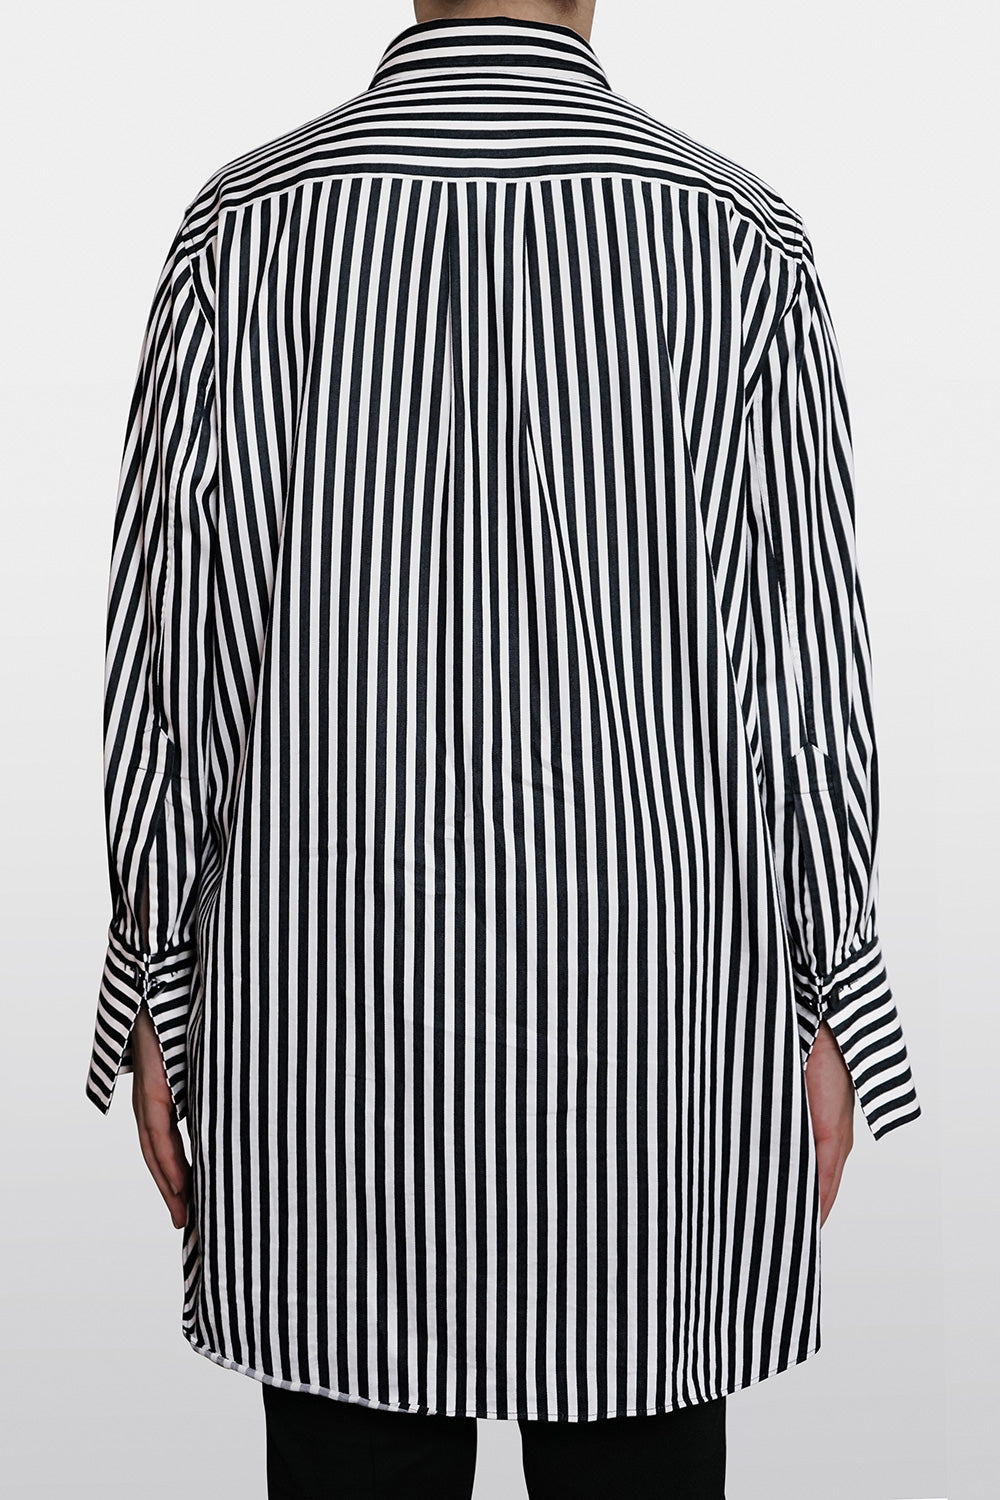 Malene Birger Pre-Owned Oversized Stripe Shirt Size L